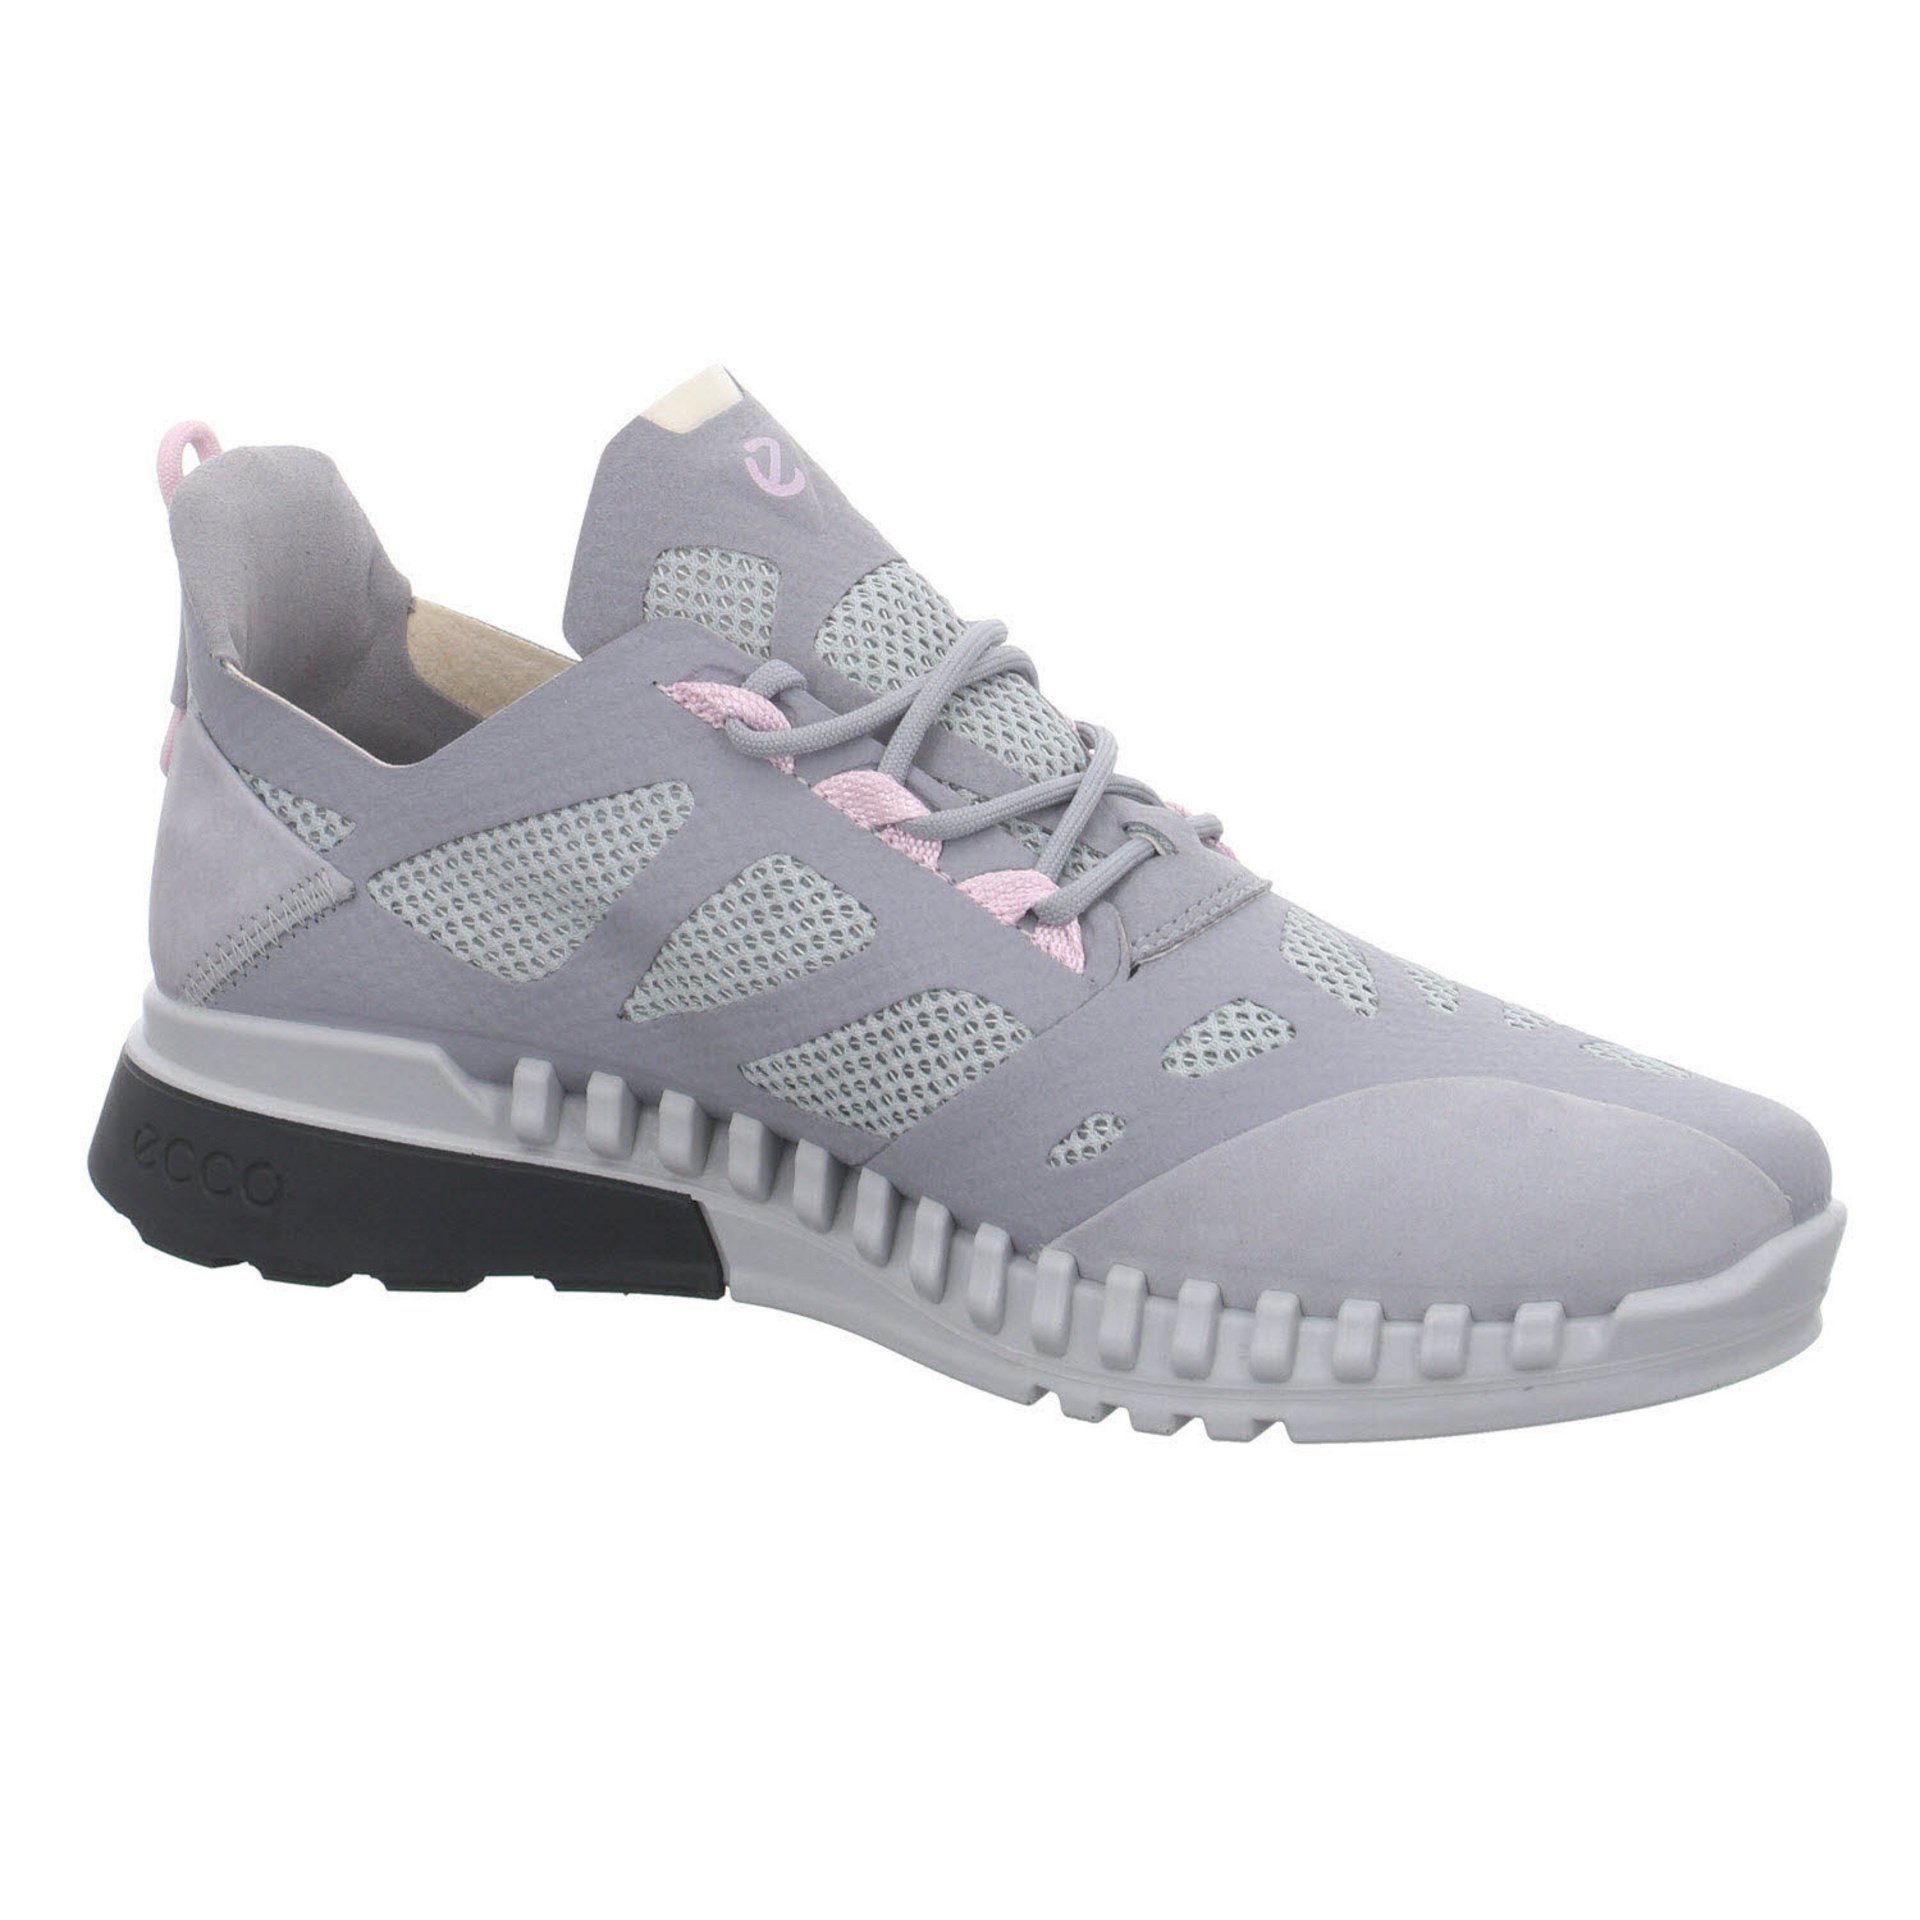 Ecco Damen Sneaker Leder-/Textilkombination Schuhe Zipflex silvergrey/silvergre Sneaker Schnürschuh